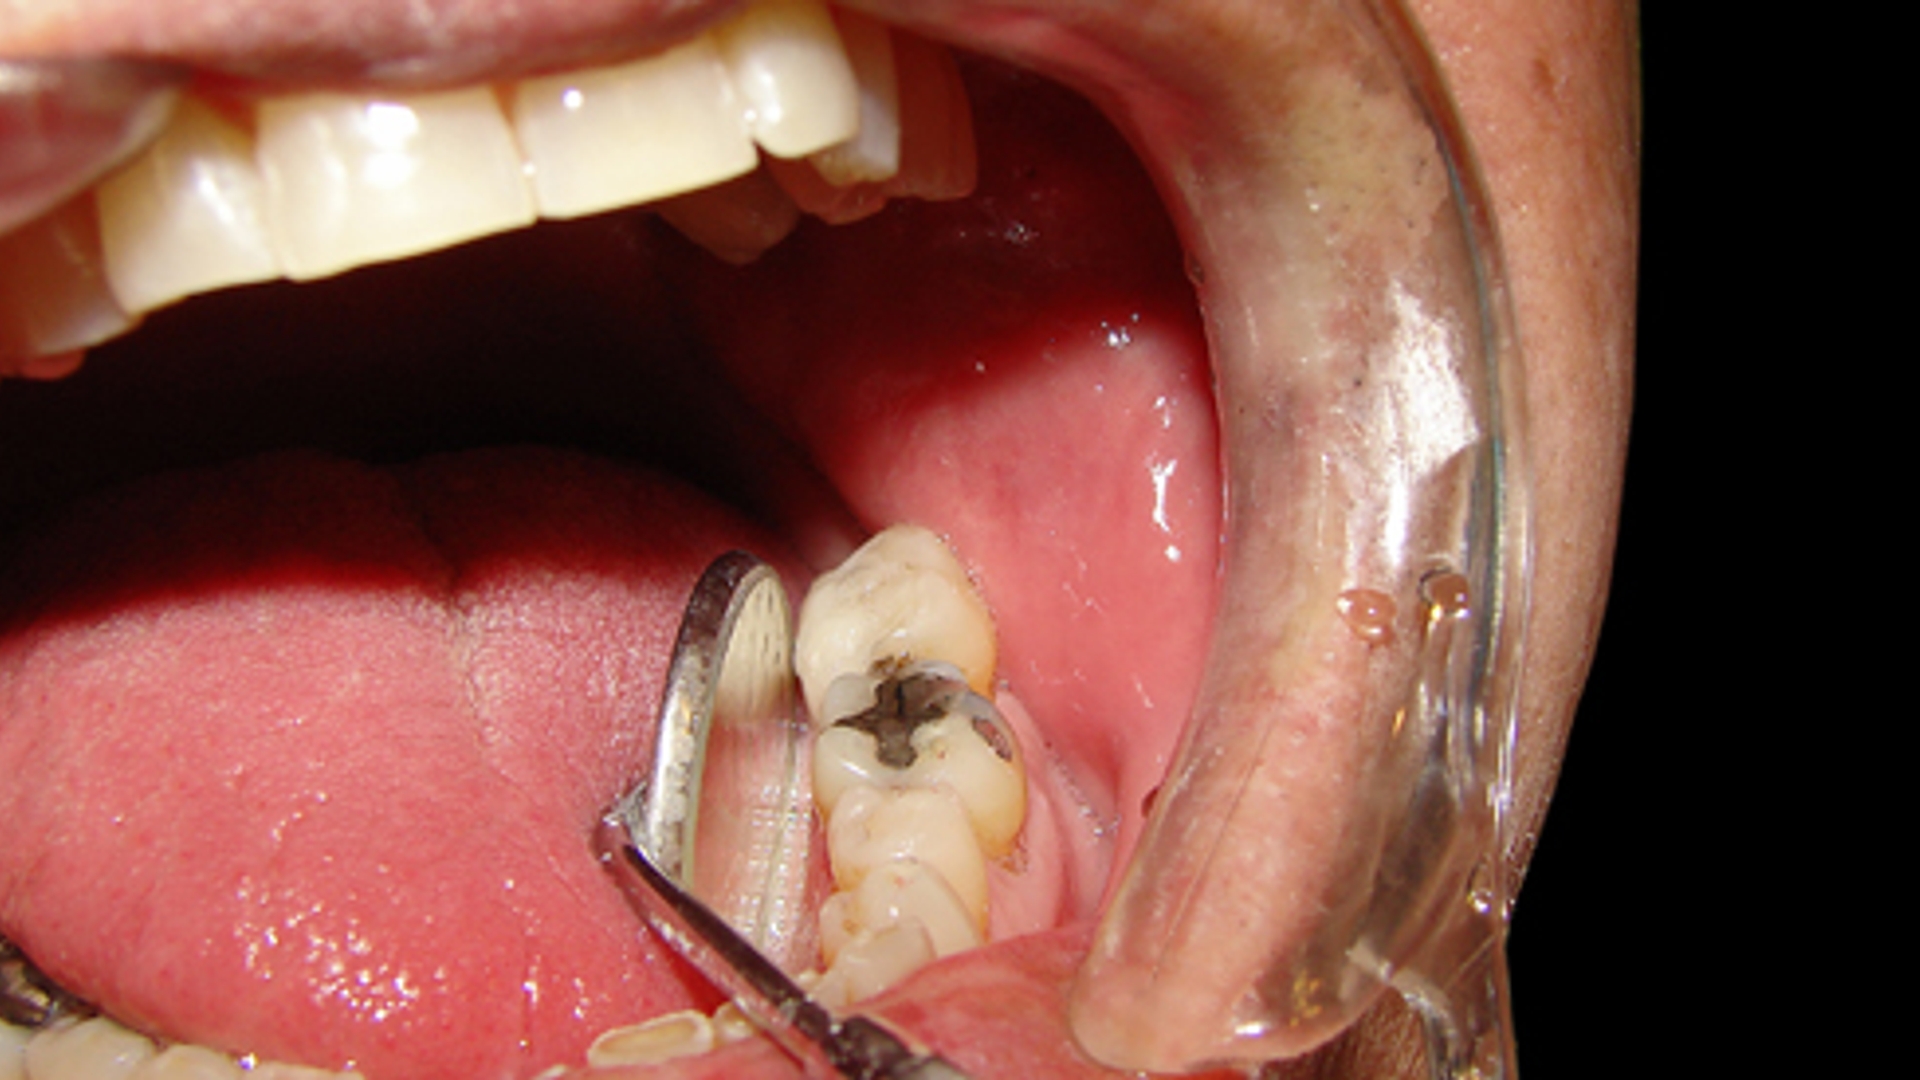 tandartsbehandeling_02.jpg